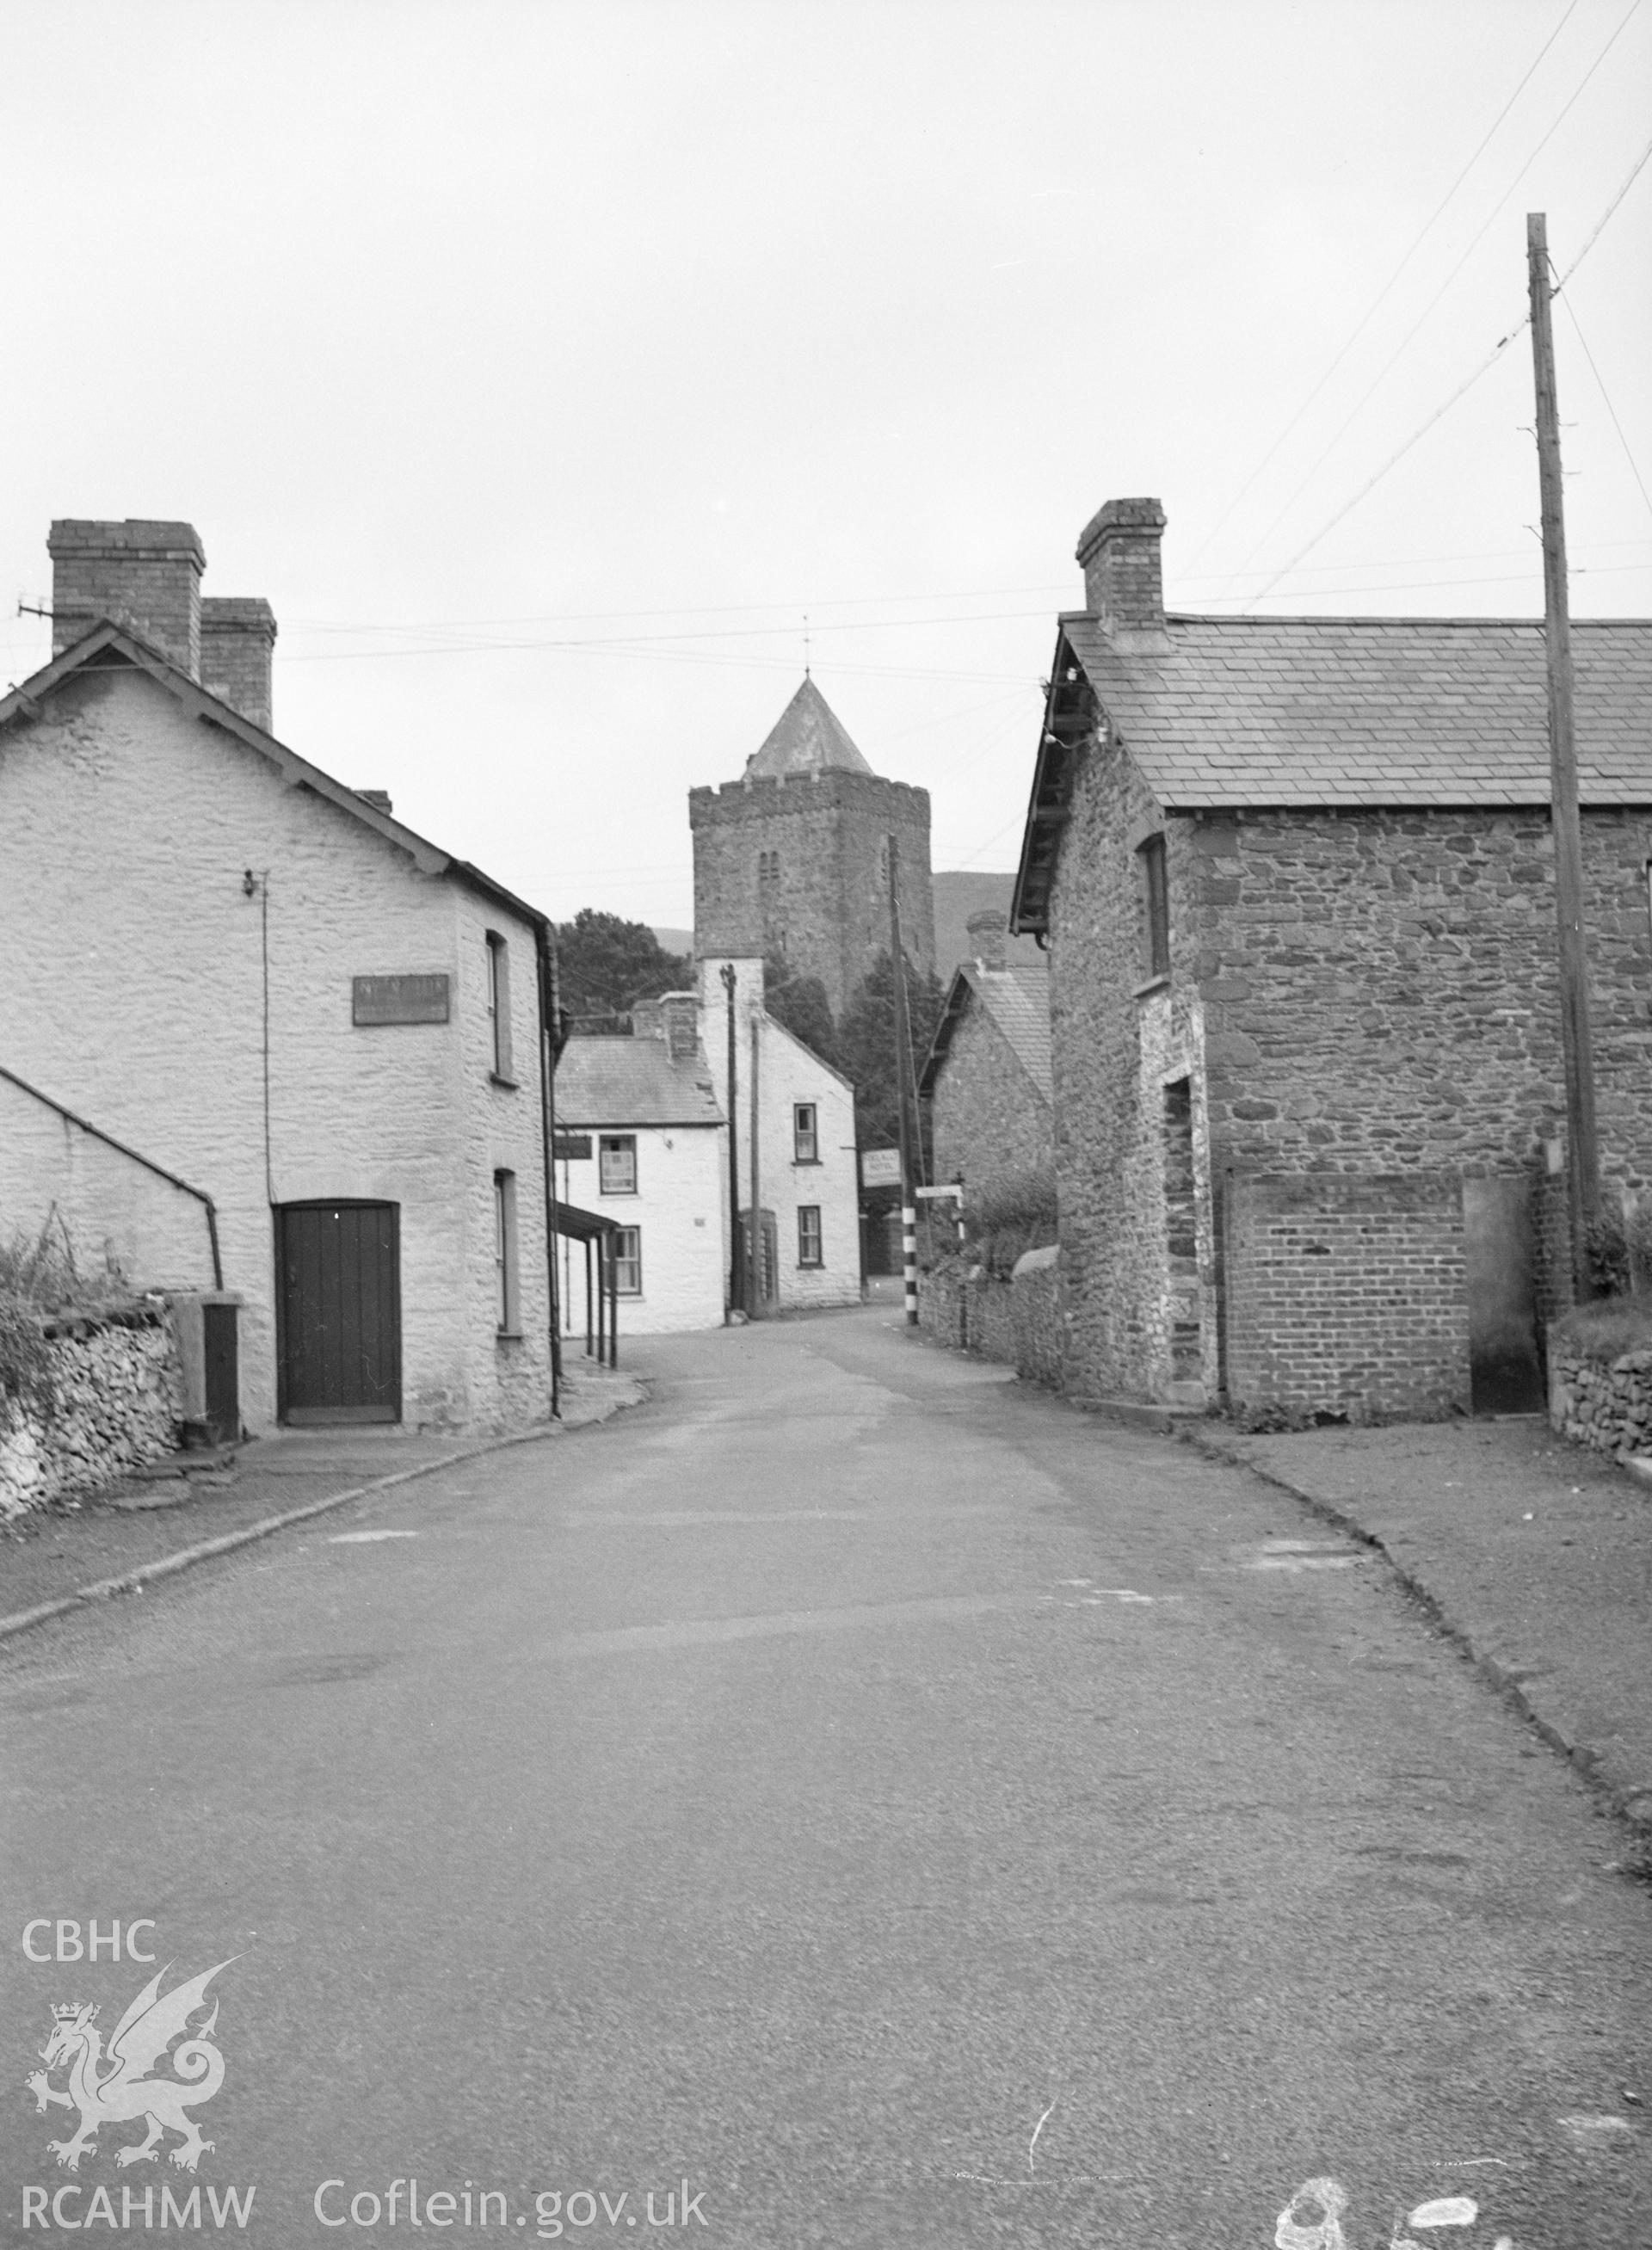 A black and white photo showing a Llanddewi Brefi